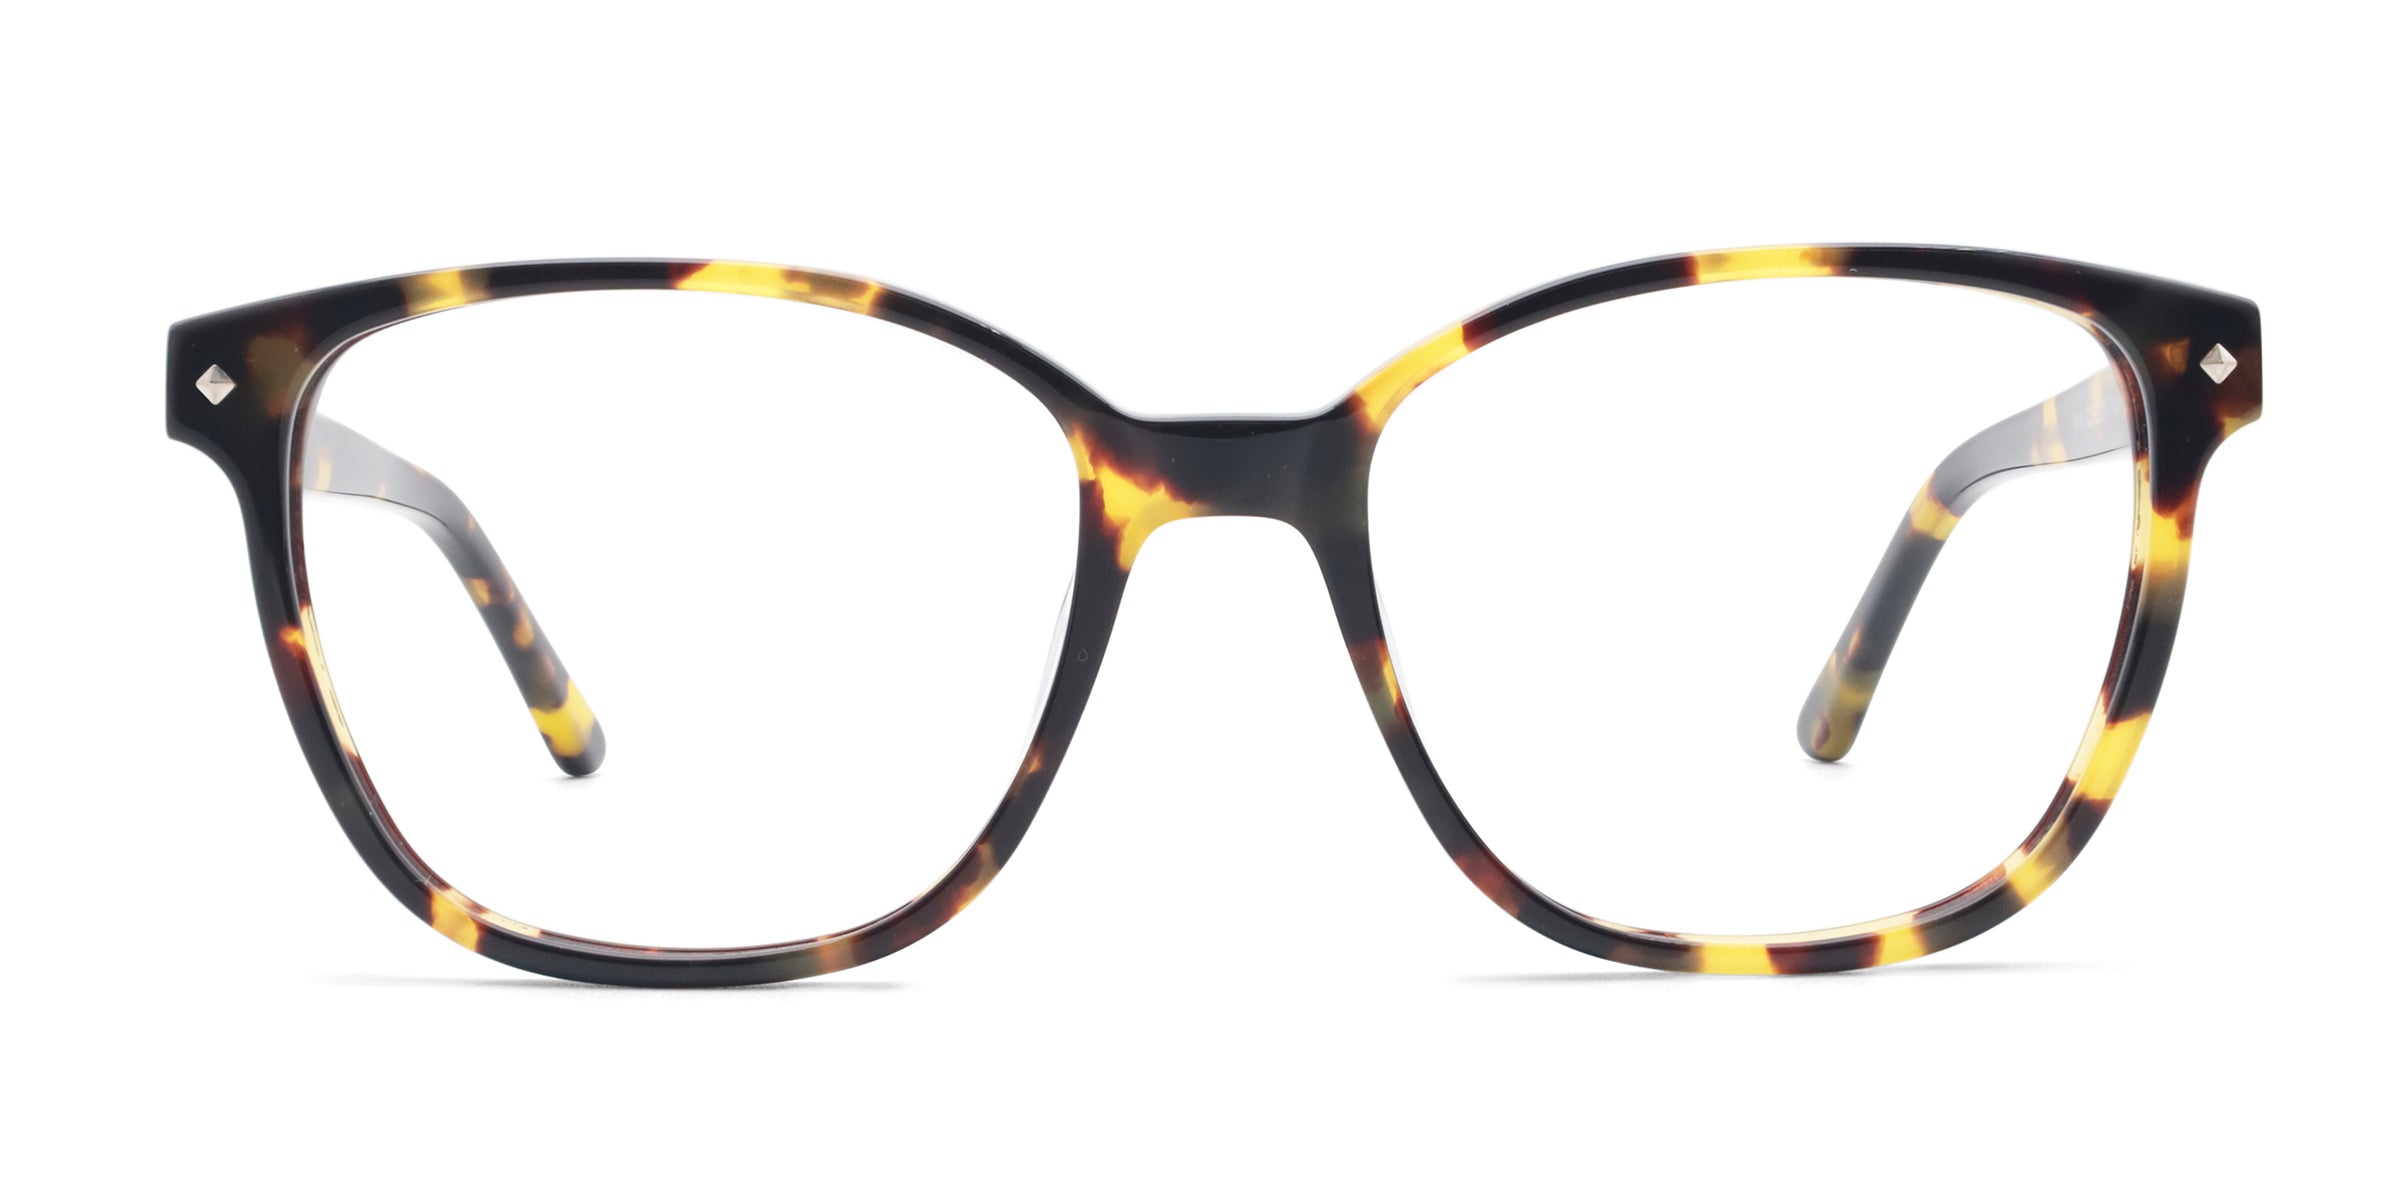 haley square tortoise eyeglasses frames front view